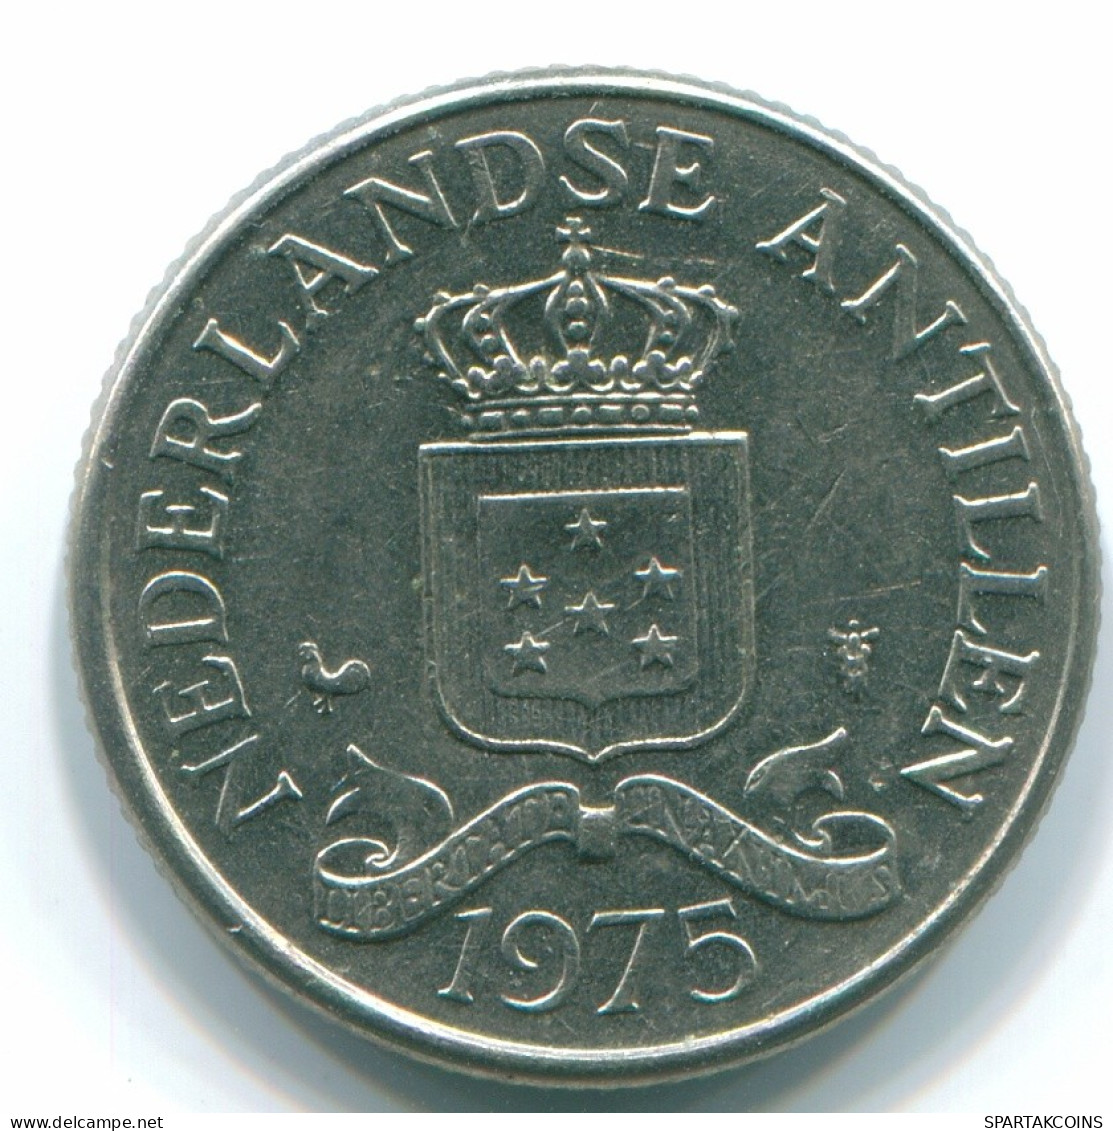 25 CENTS 1975 NETHERLANDS ANTILLES Nickel Colonial Coin #S11617.U.A - Nederlandse Antillen